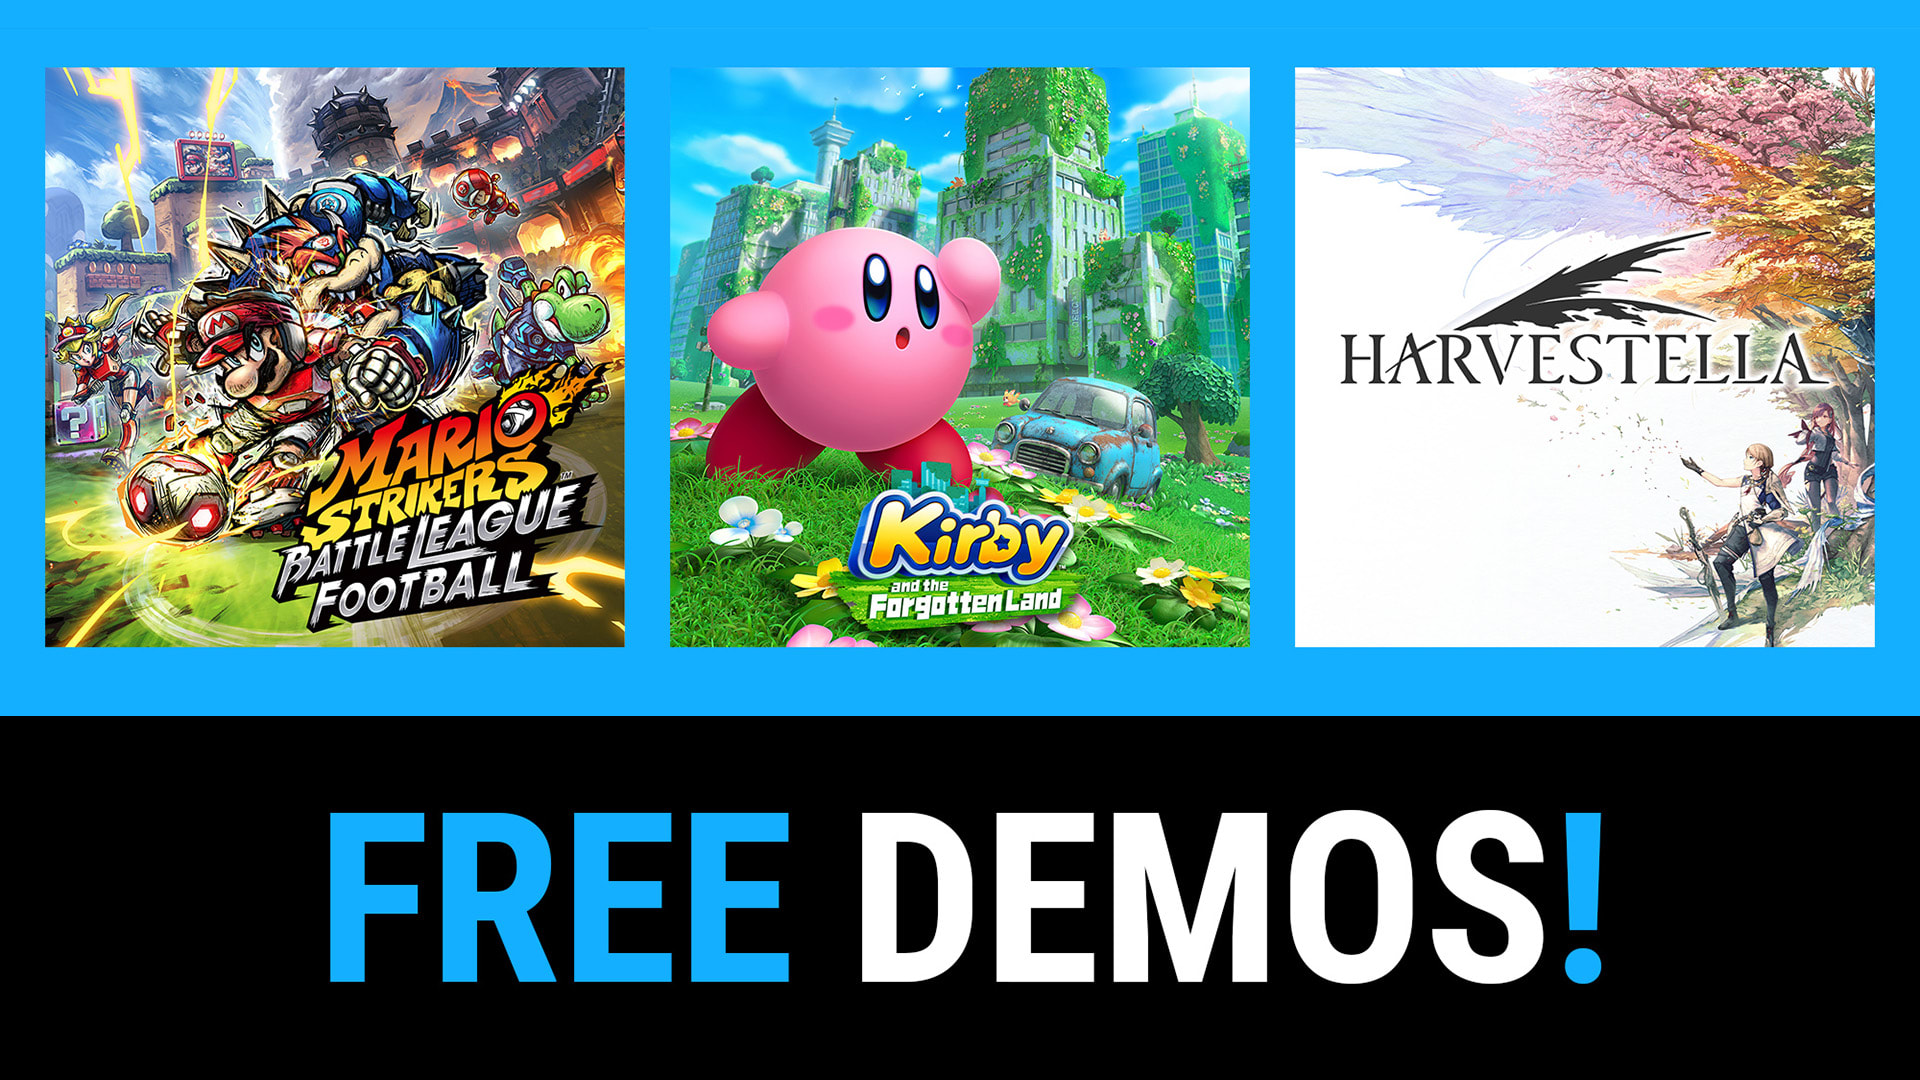 Freetendo - FREE Nintendo Switch Games!